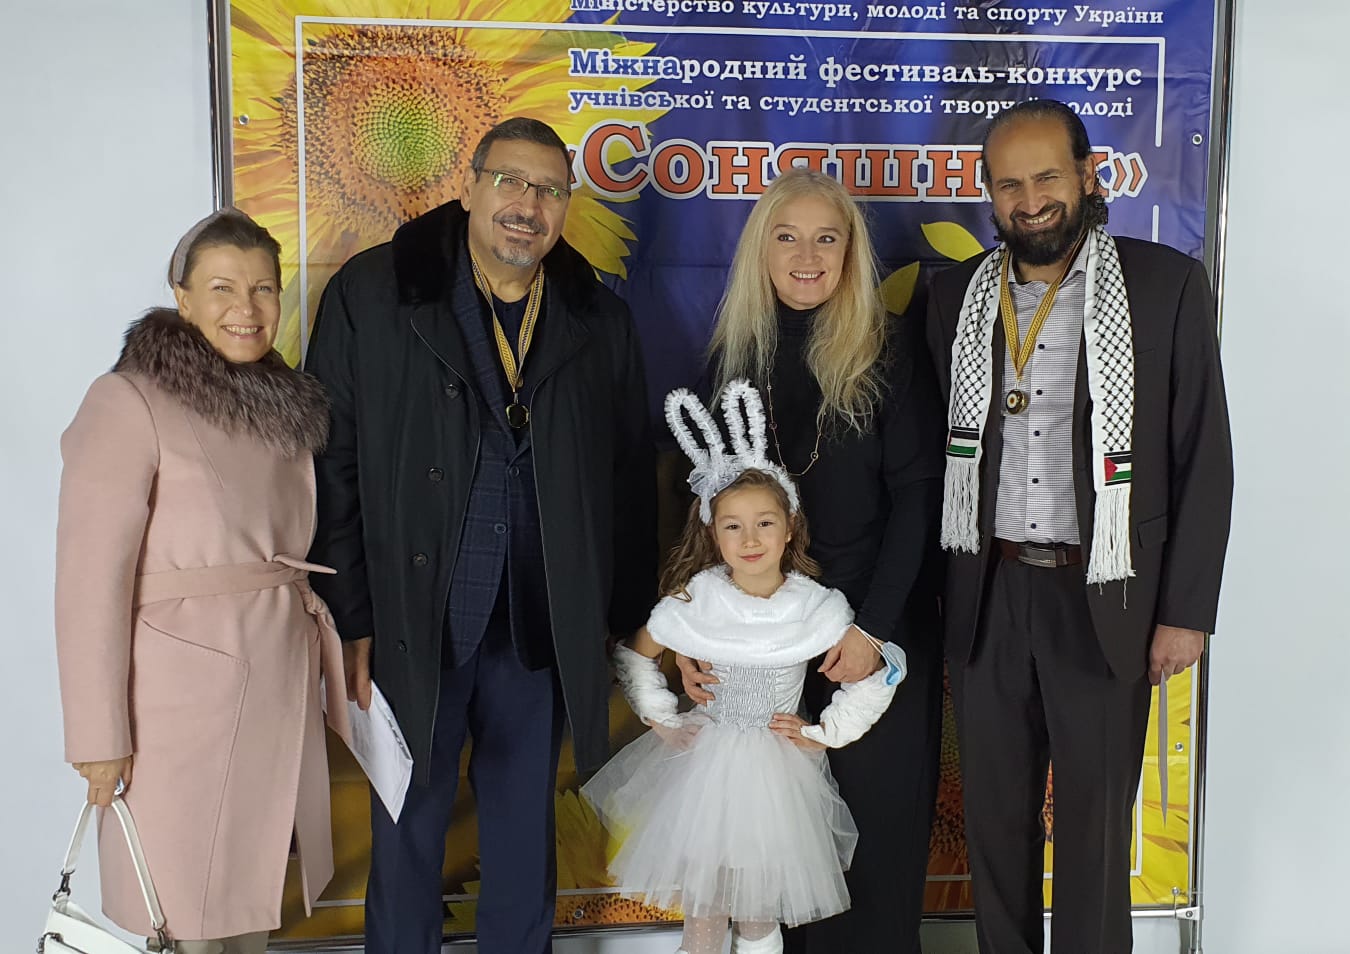 Ambassador Dajani taking part in the celebration organized by the International Charitable Fund “Soniashnyk”